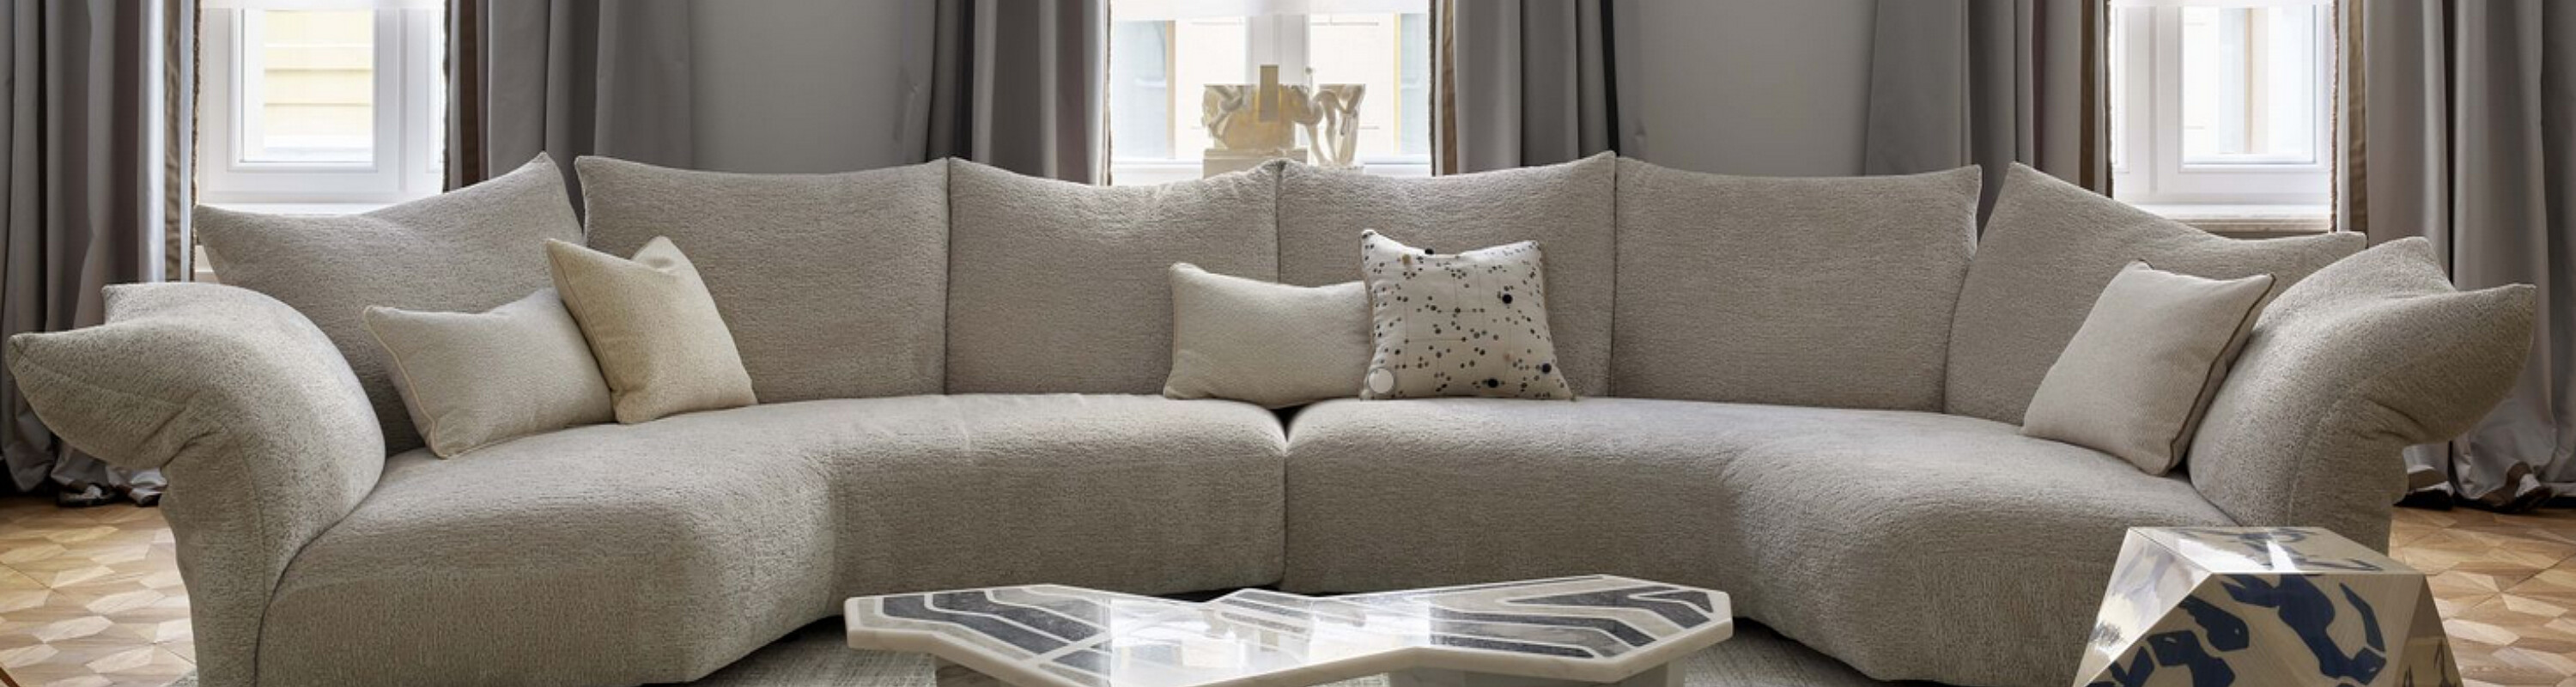 Edra Standard sofa bij Classo, Gent-Lochristi, Foto Sergey Ananiev